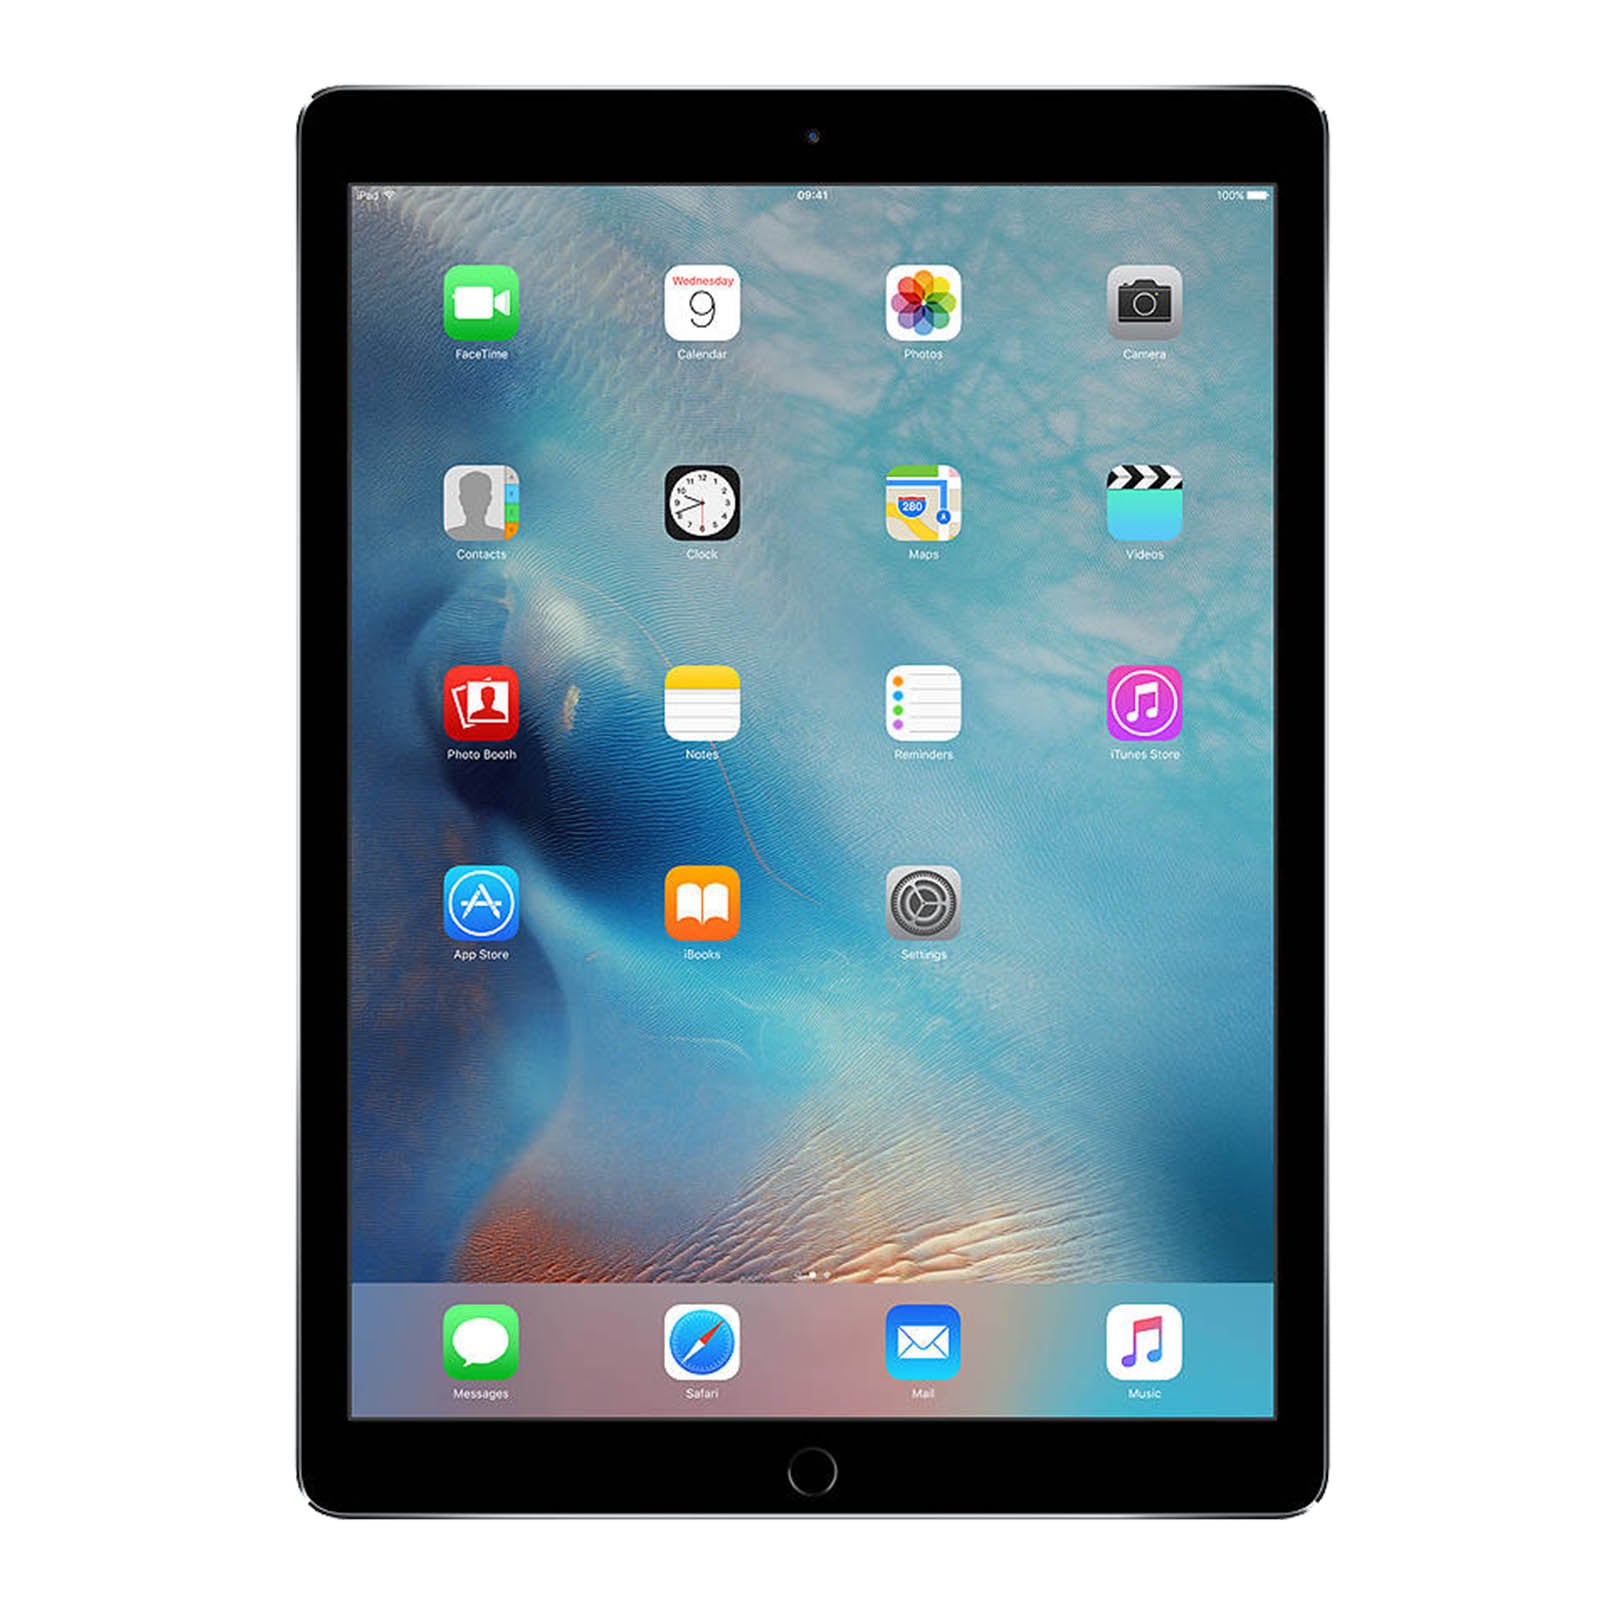 iPad Pro 12.9 Inch 3rd Gen 256GB Space Grey Very Good - WiFi